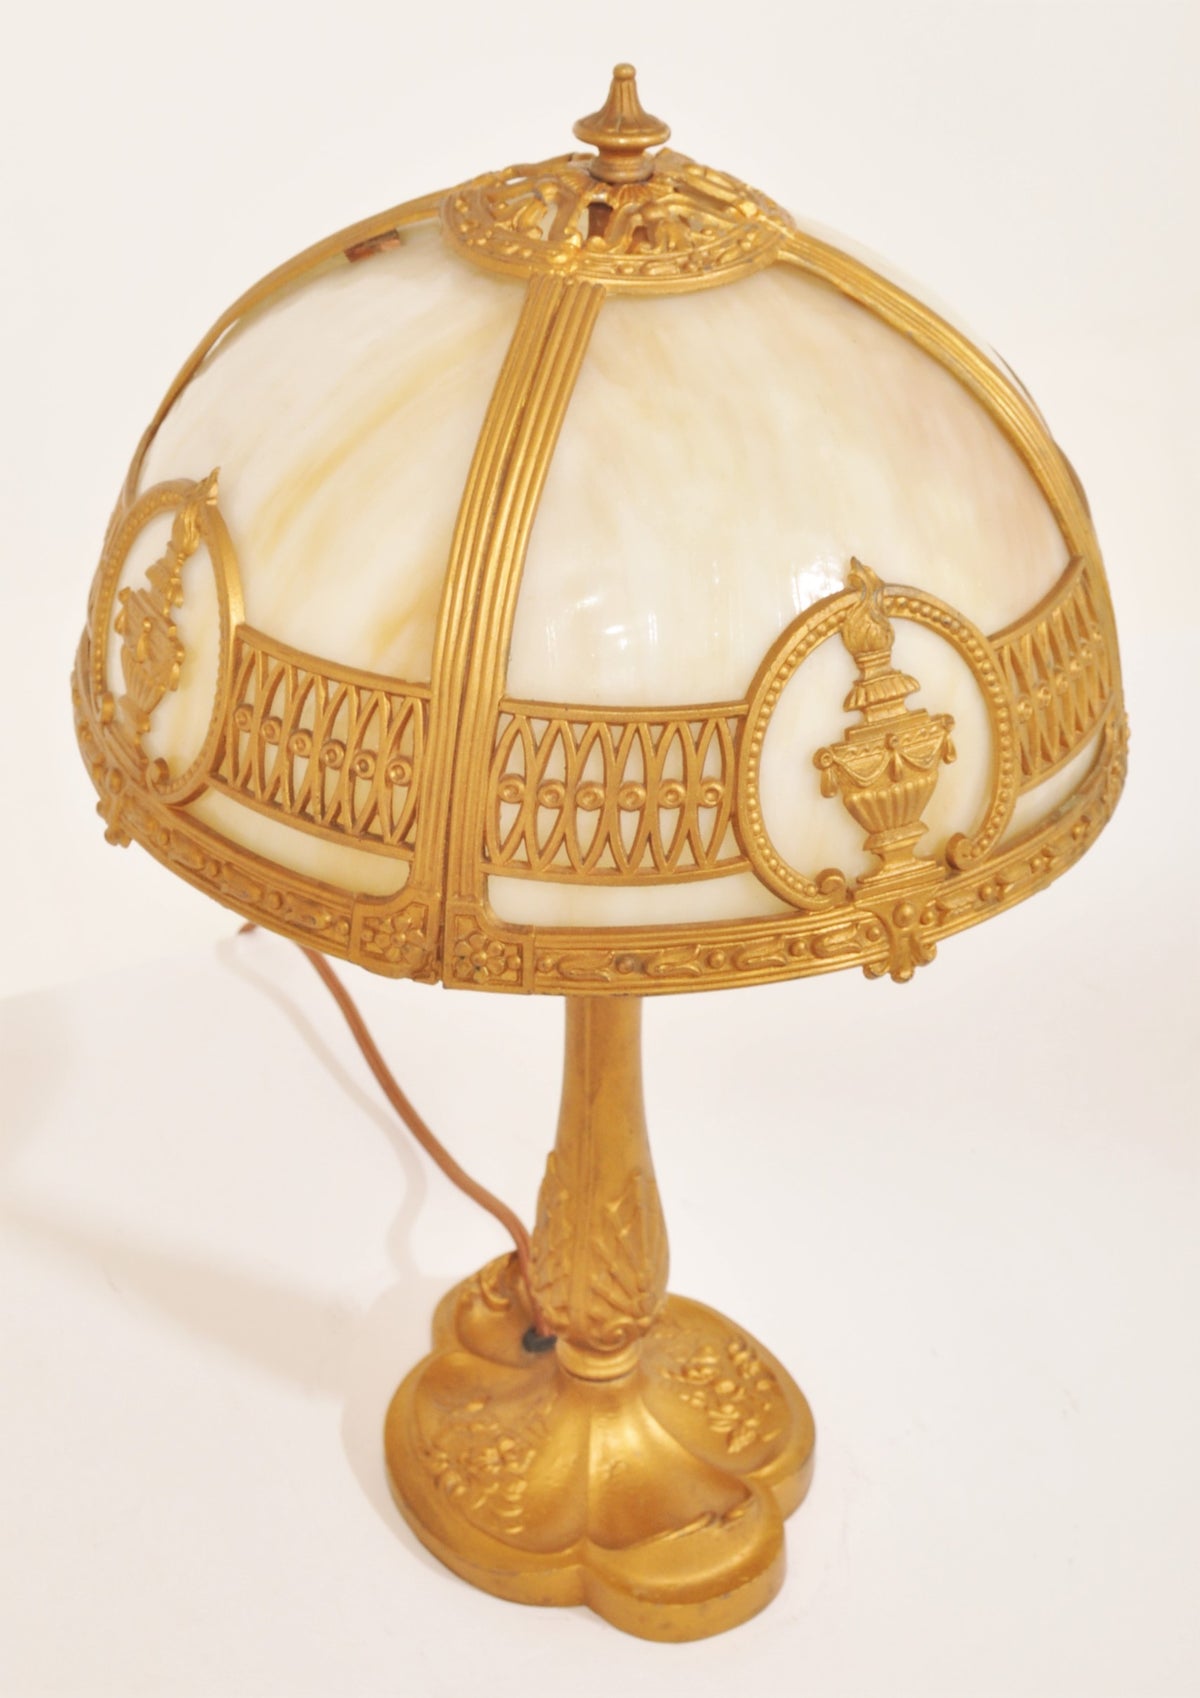 Antique American Boudoir Bronze & Slag Glass Table Lamp, Circa 1900